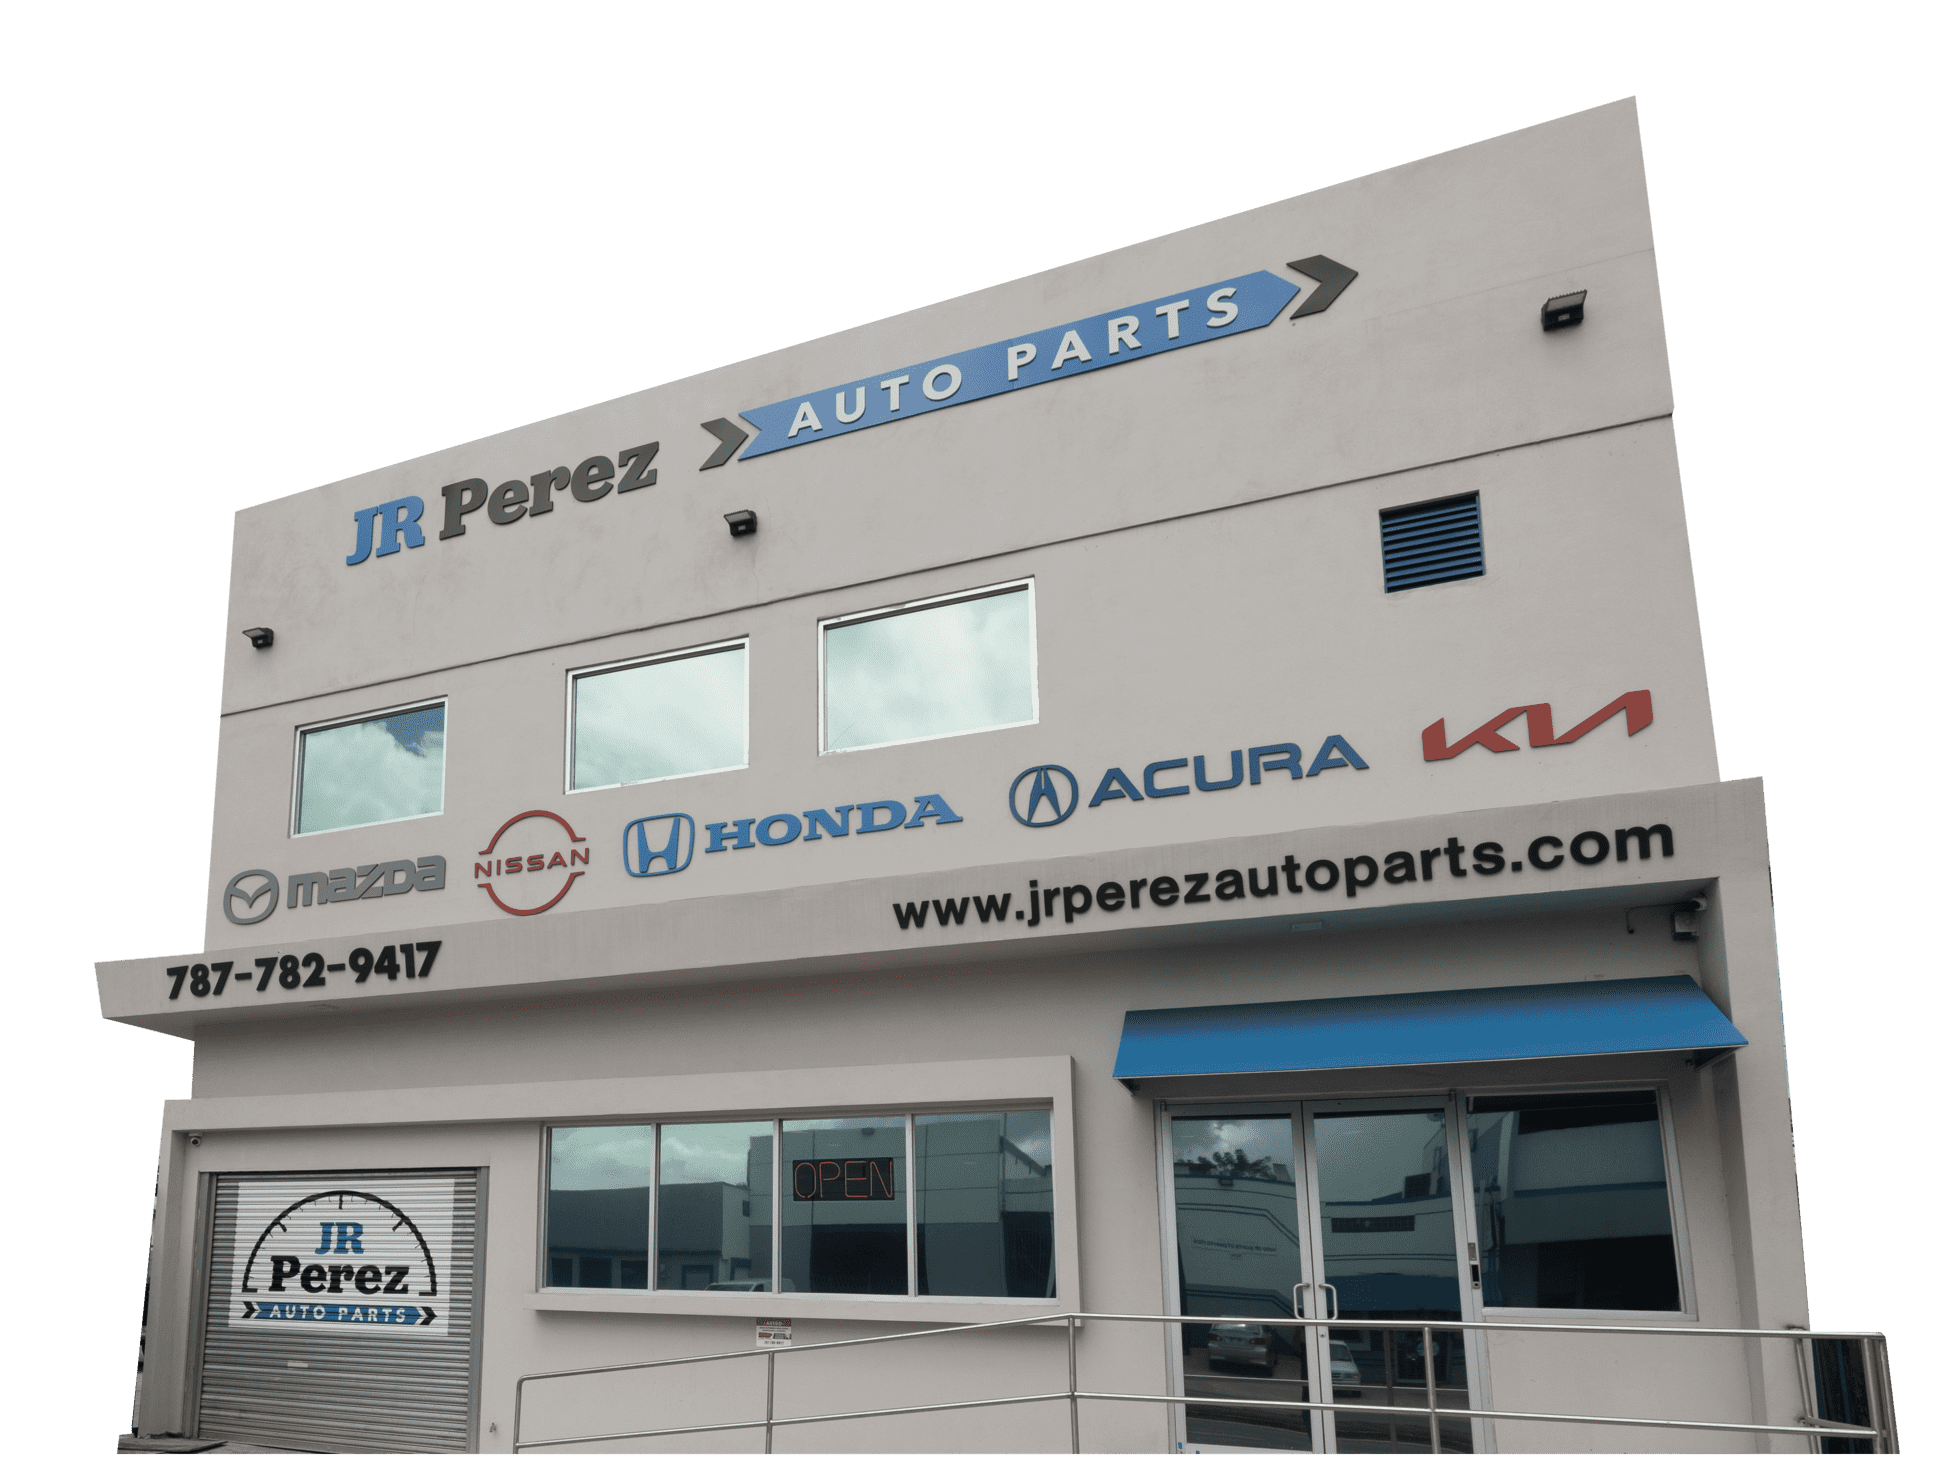 JR Perez Auto Parts - Local